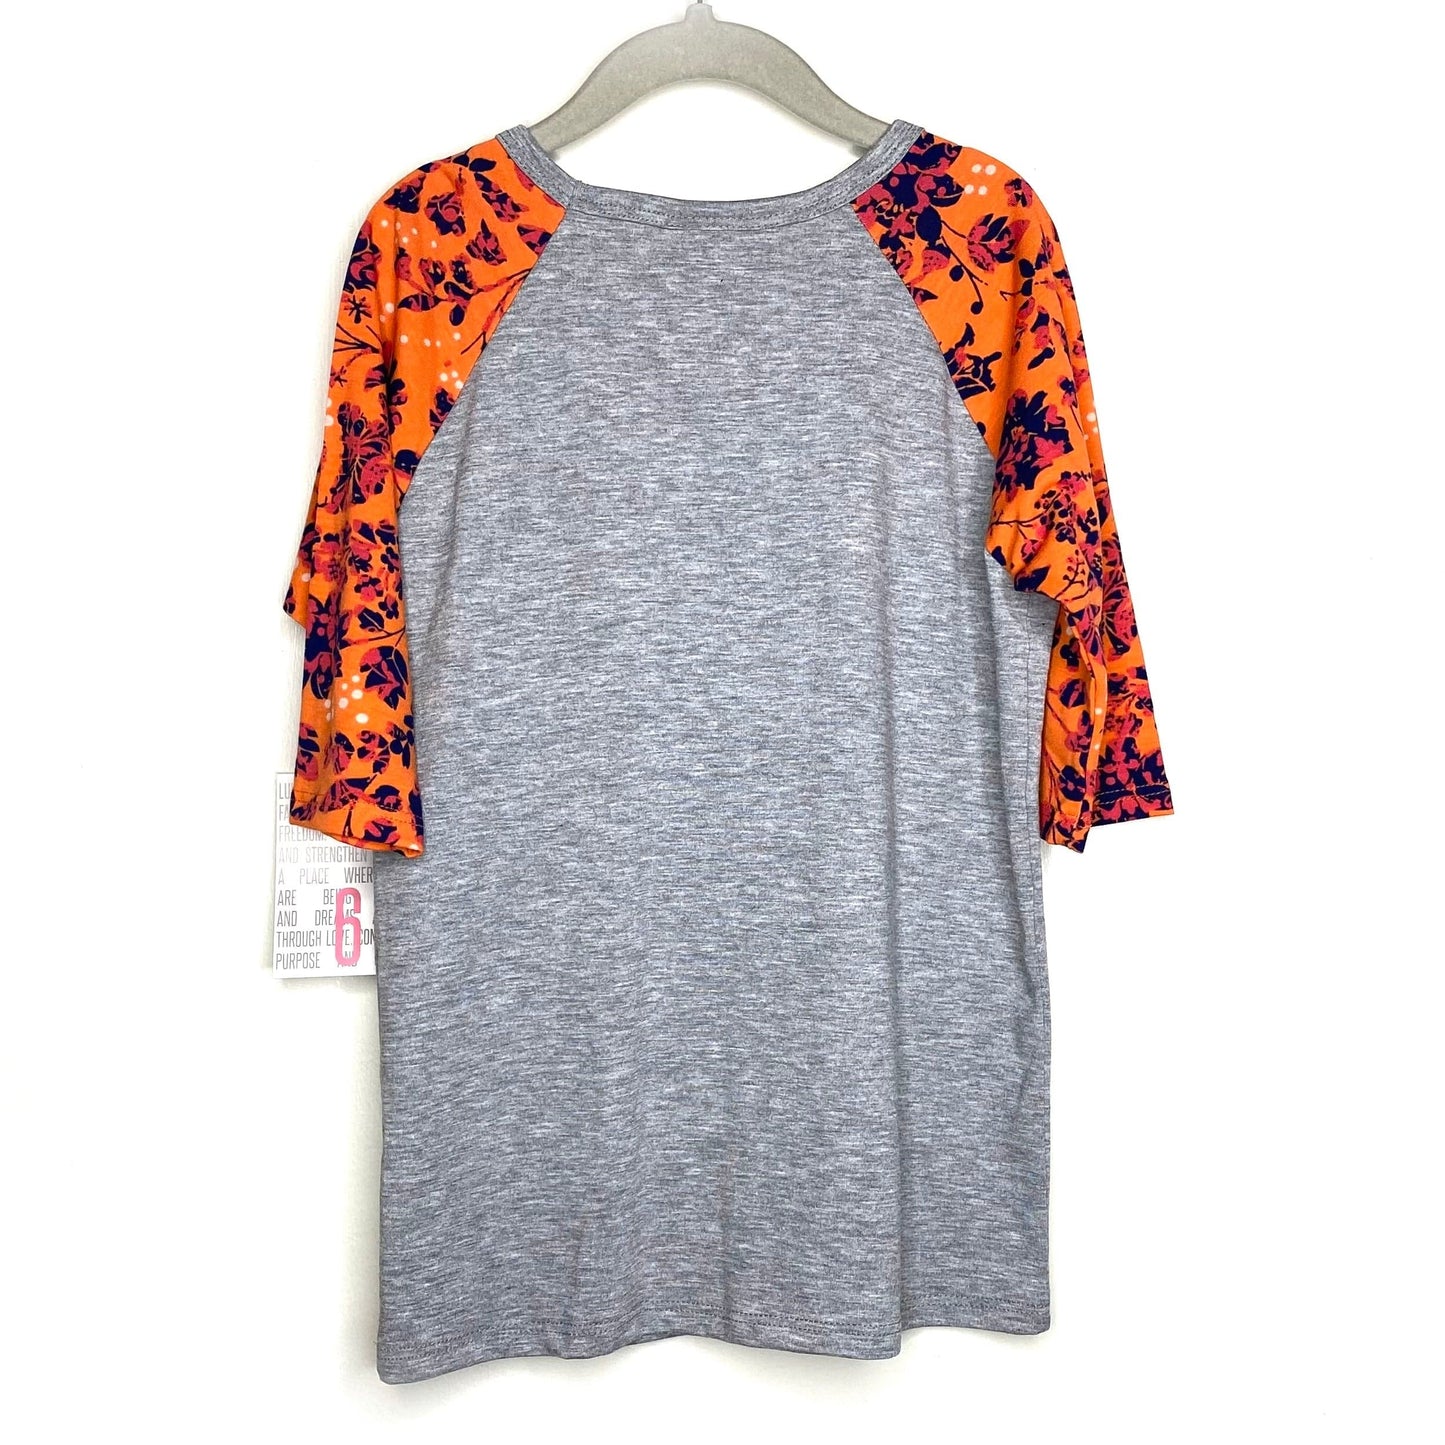 LuLaRoe Kids Unisex 6 Orange/Blue/Gray Sloan Heather/Floral Raglan T-Shirt 3/4 Sleeves NWT